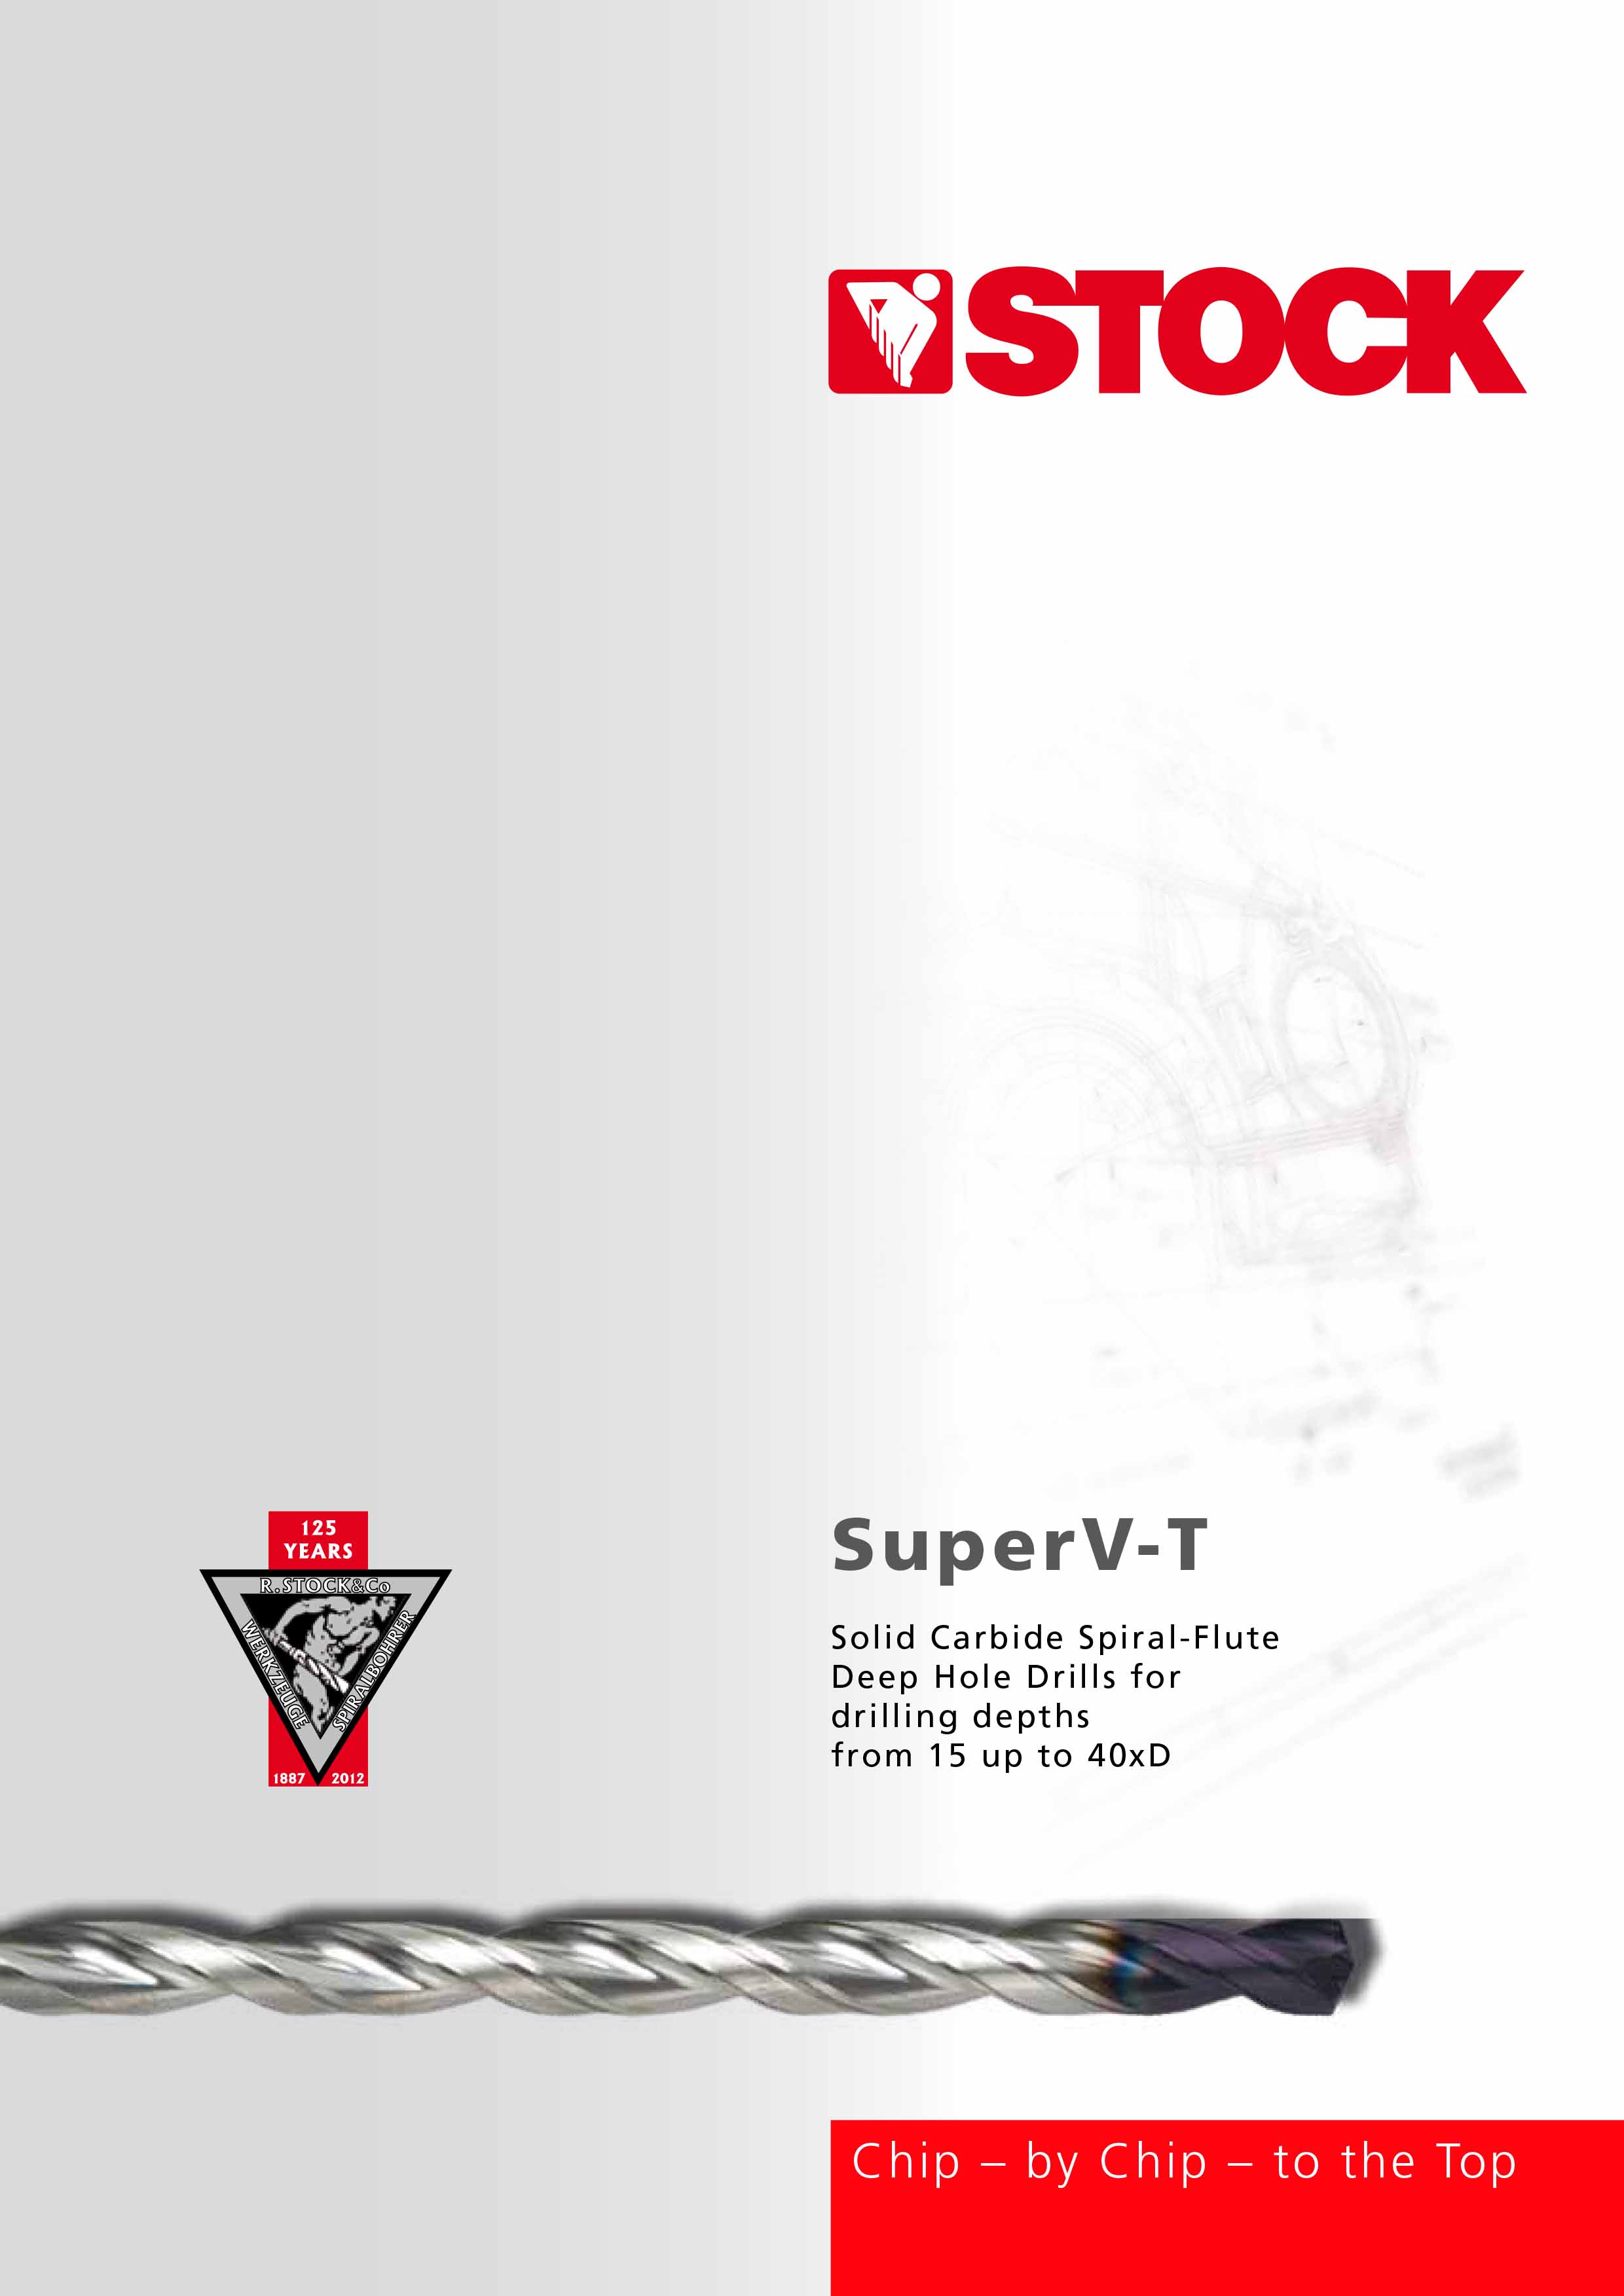 R. STOCK SuperV-T